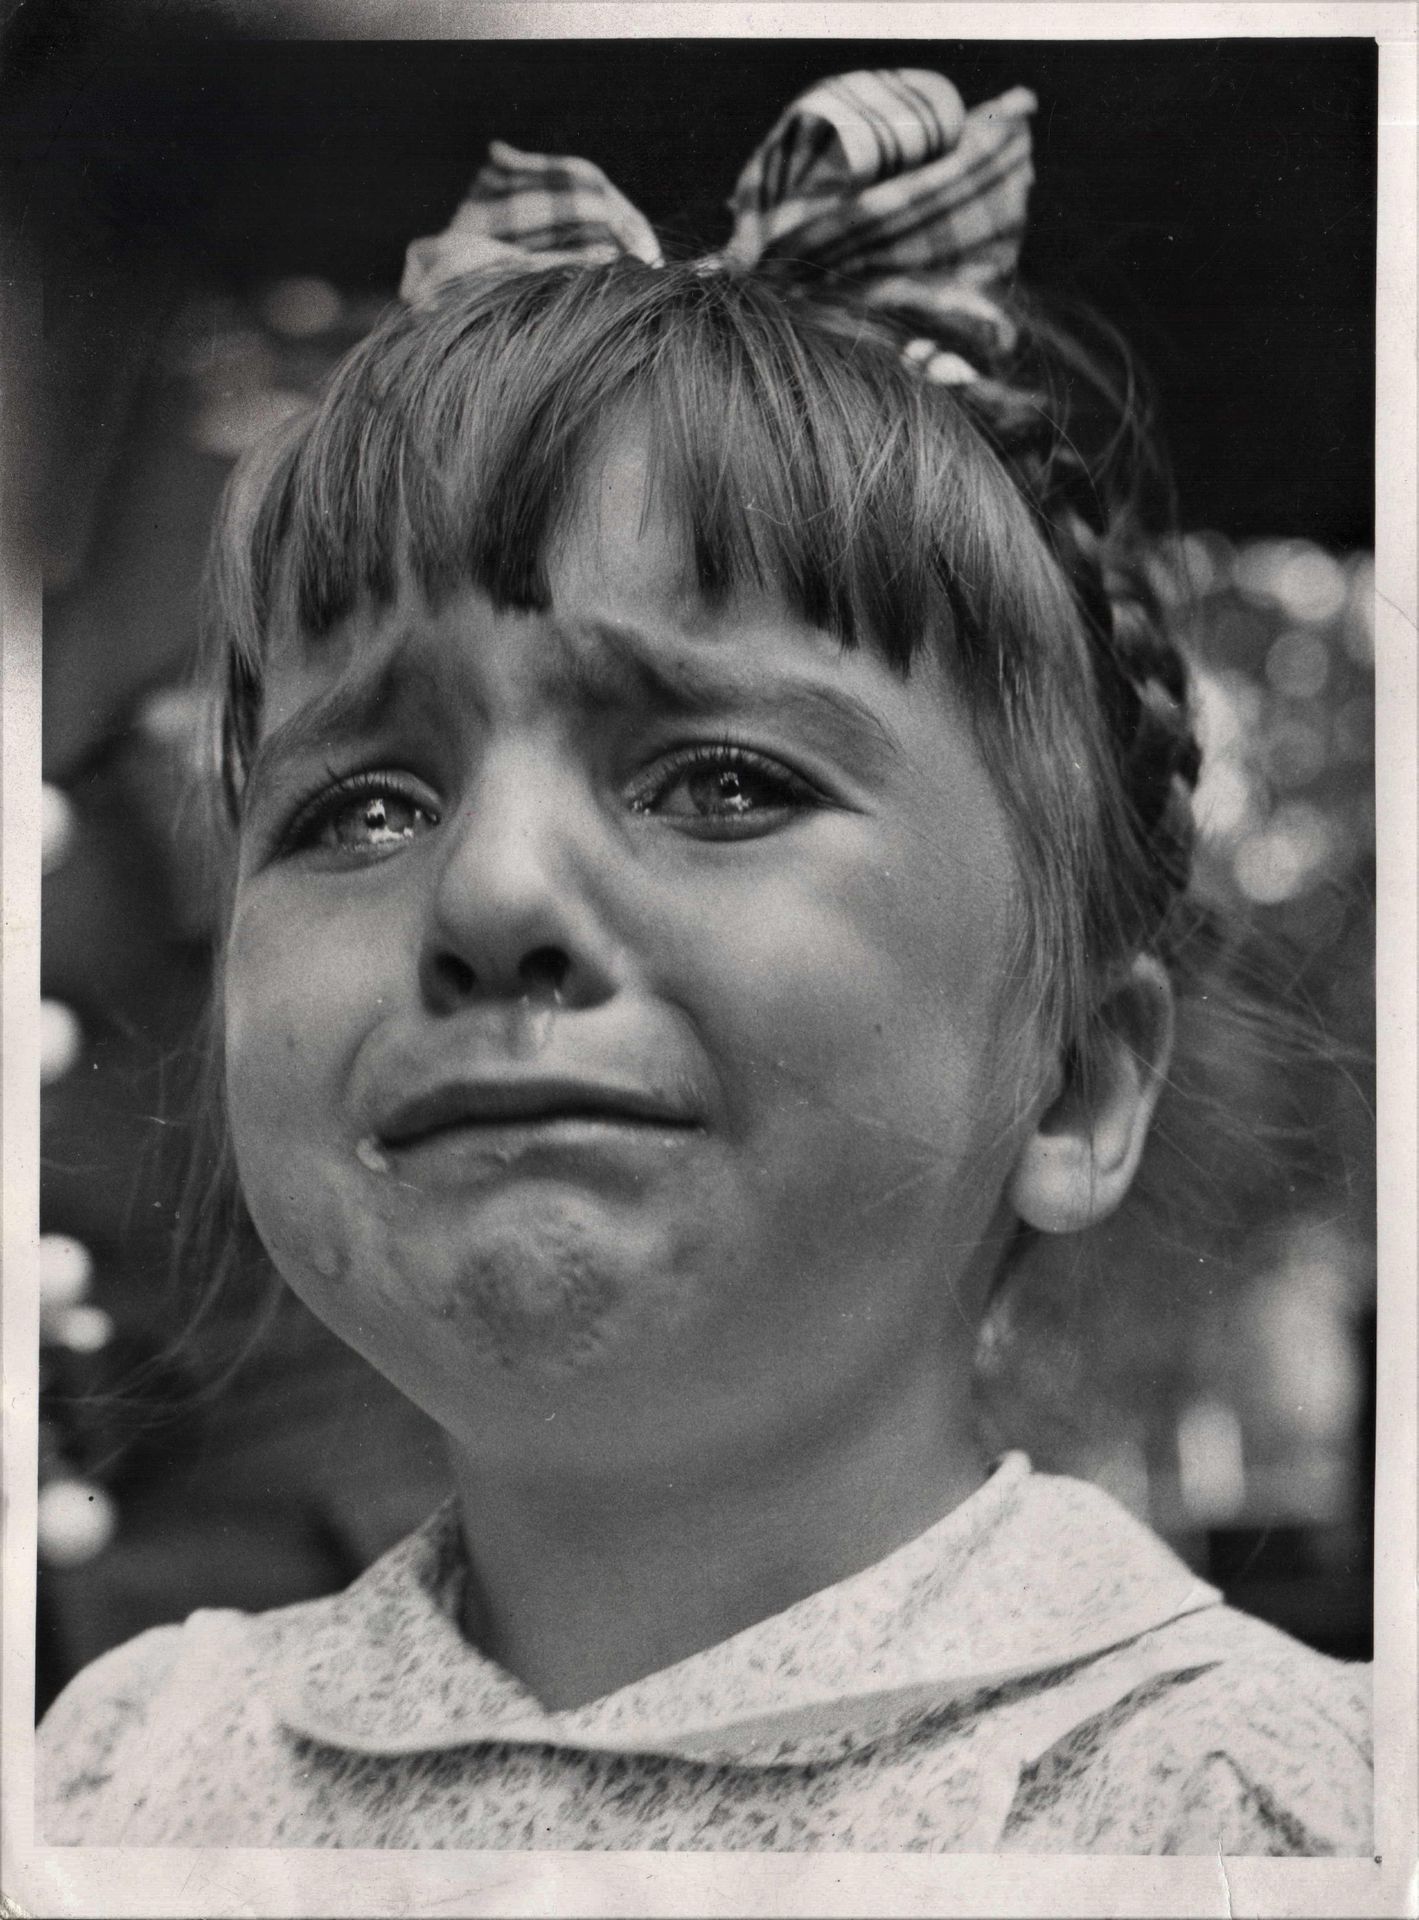 Null LYNX图片社。年轻女孩在哭泣。银色摄影作品，背面有各种印章和注释，包括 "Lynx, Agence Photographique de la Pre&hellip;